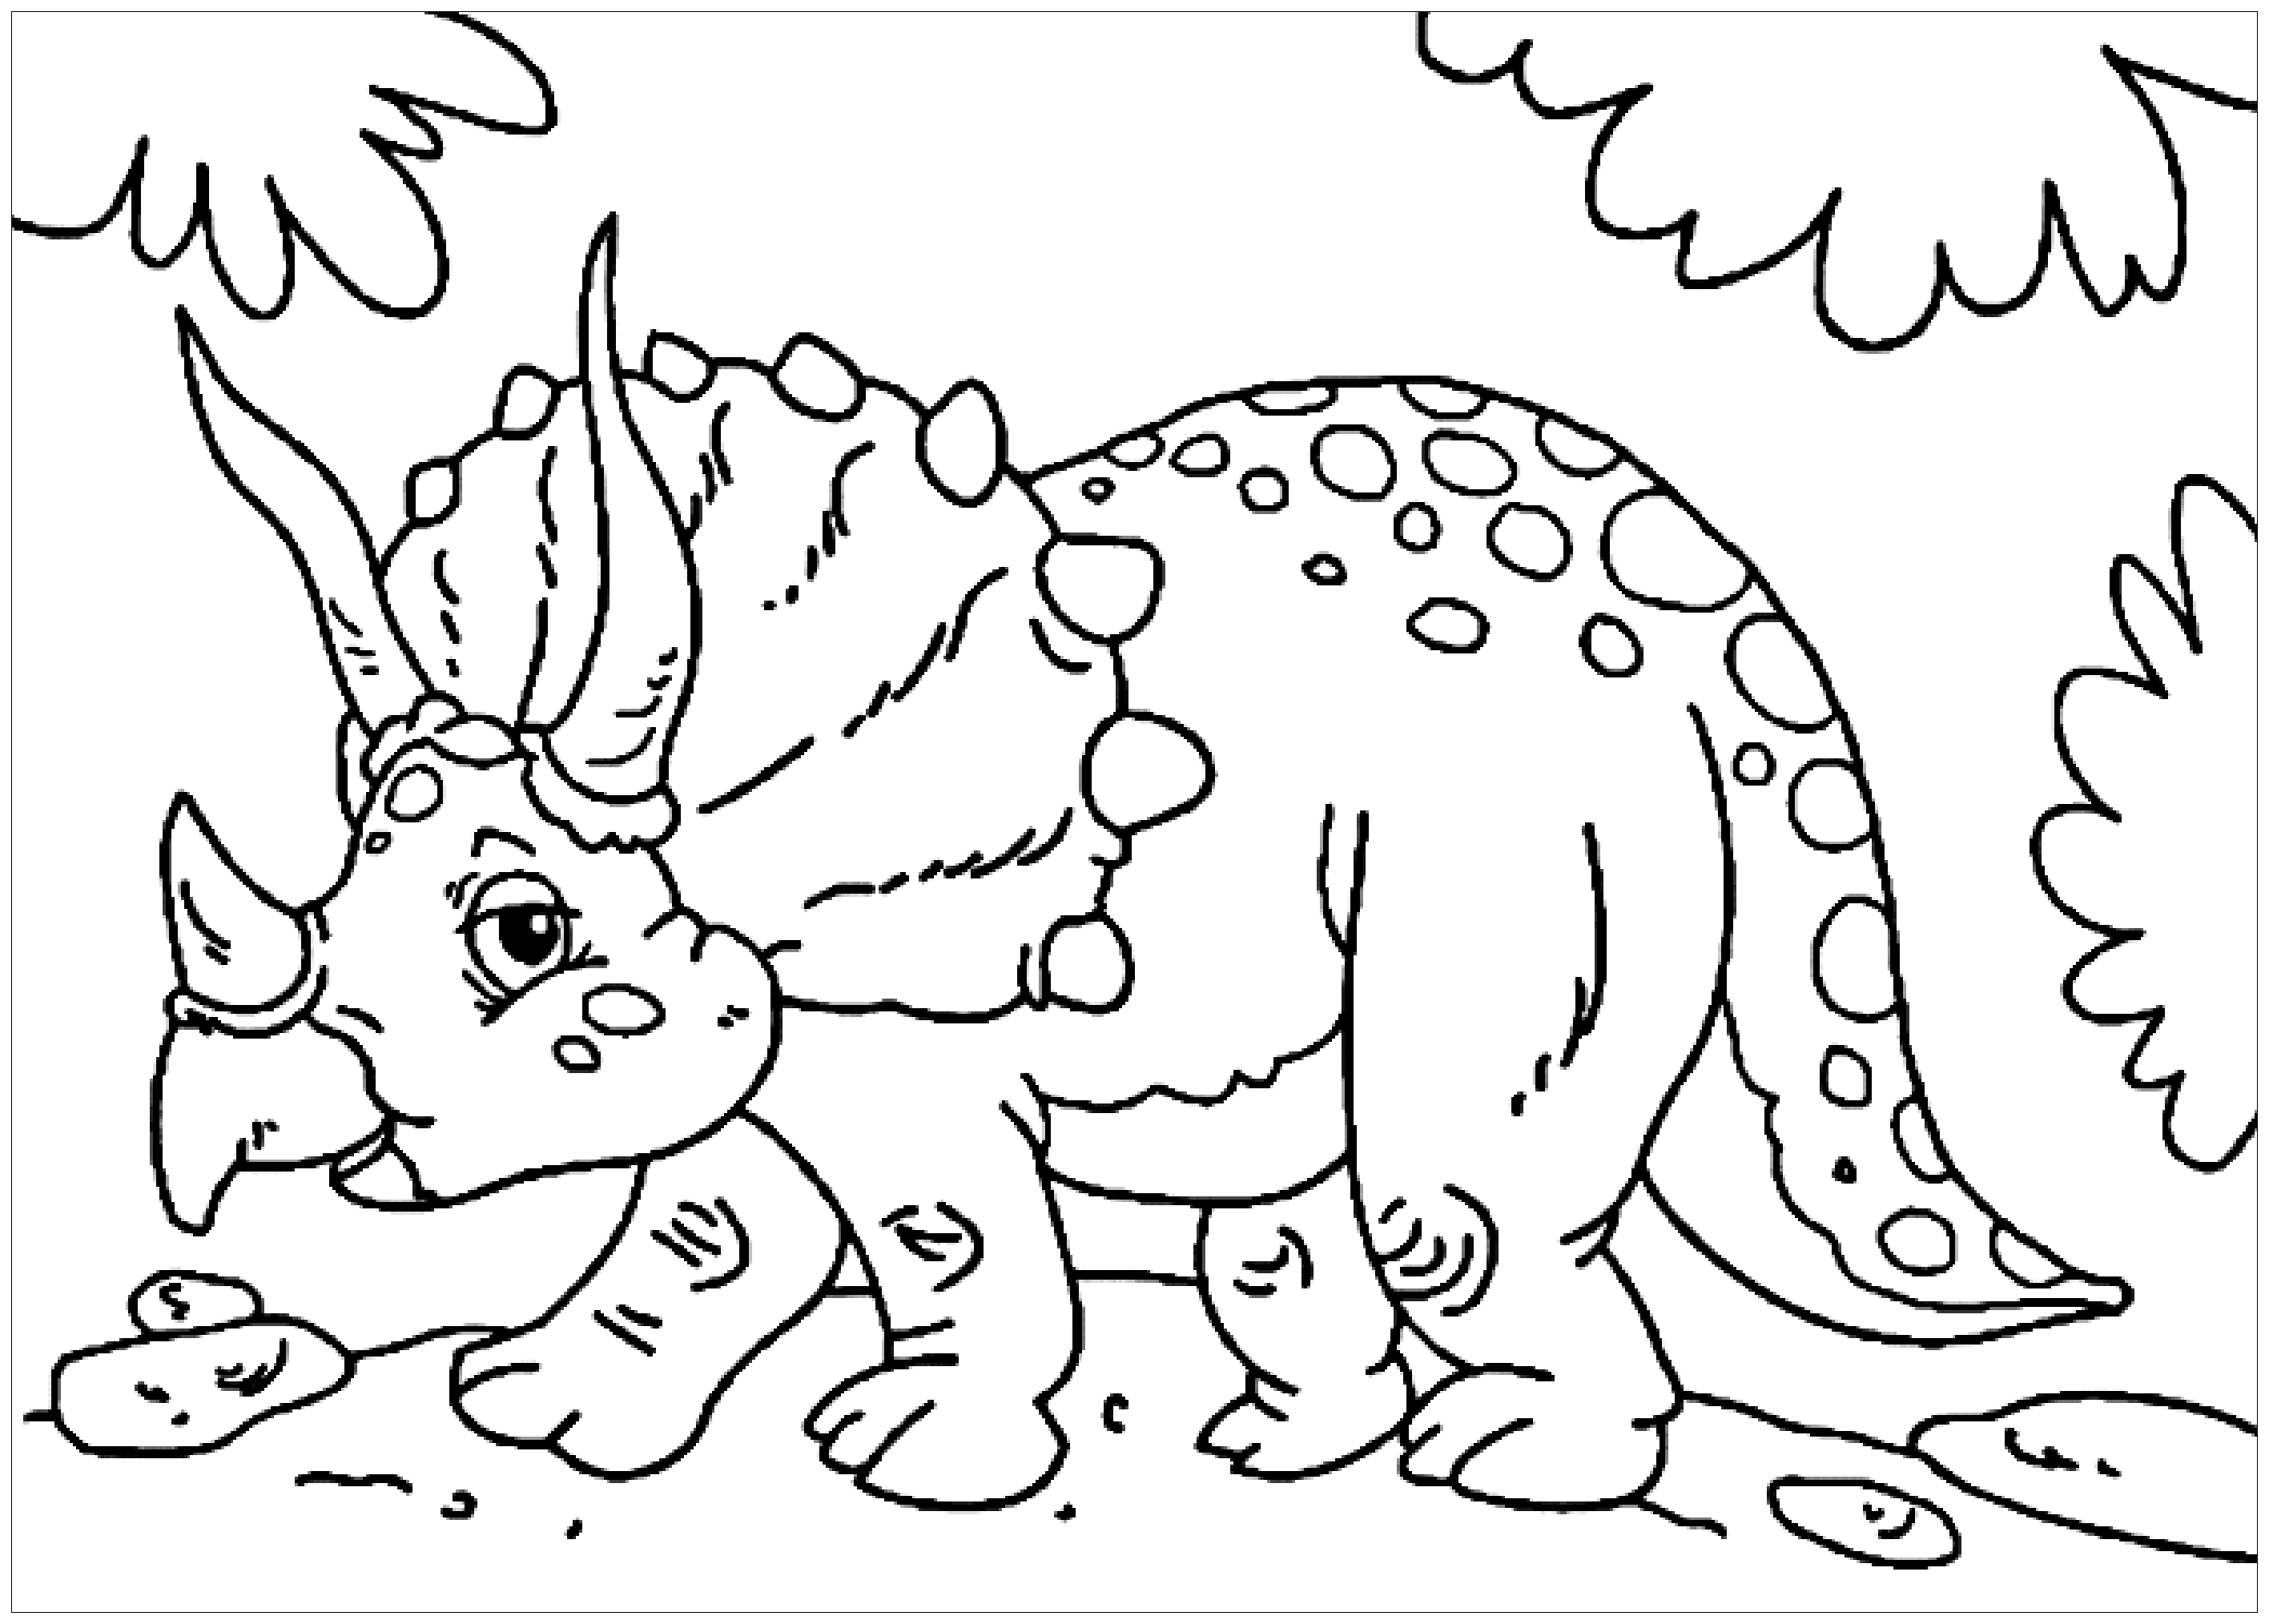 Dinosaurs for children : Triceratops - Dinosaurs Kids ...